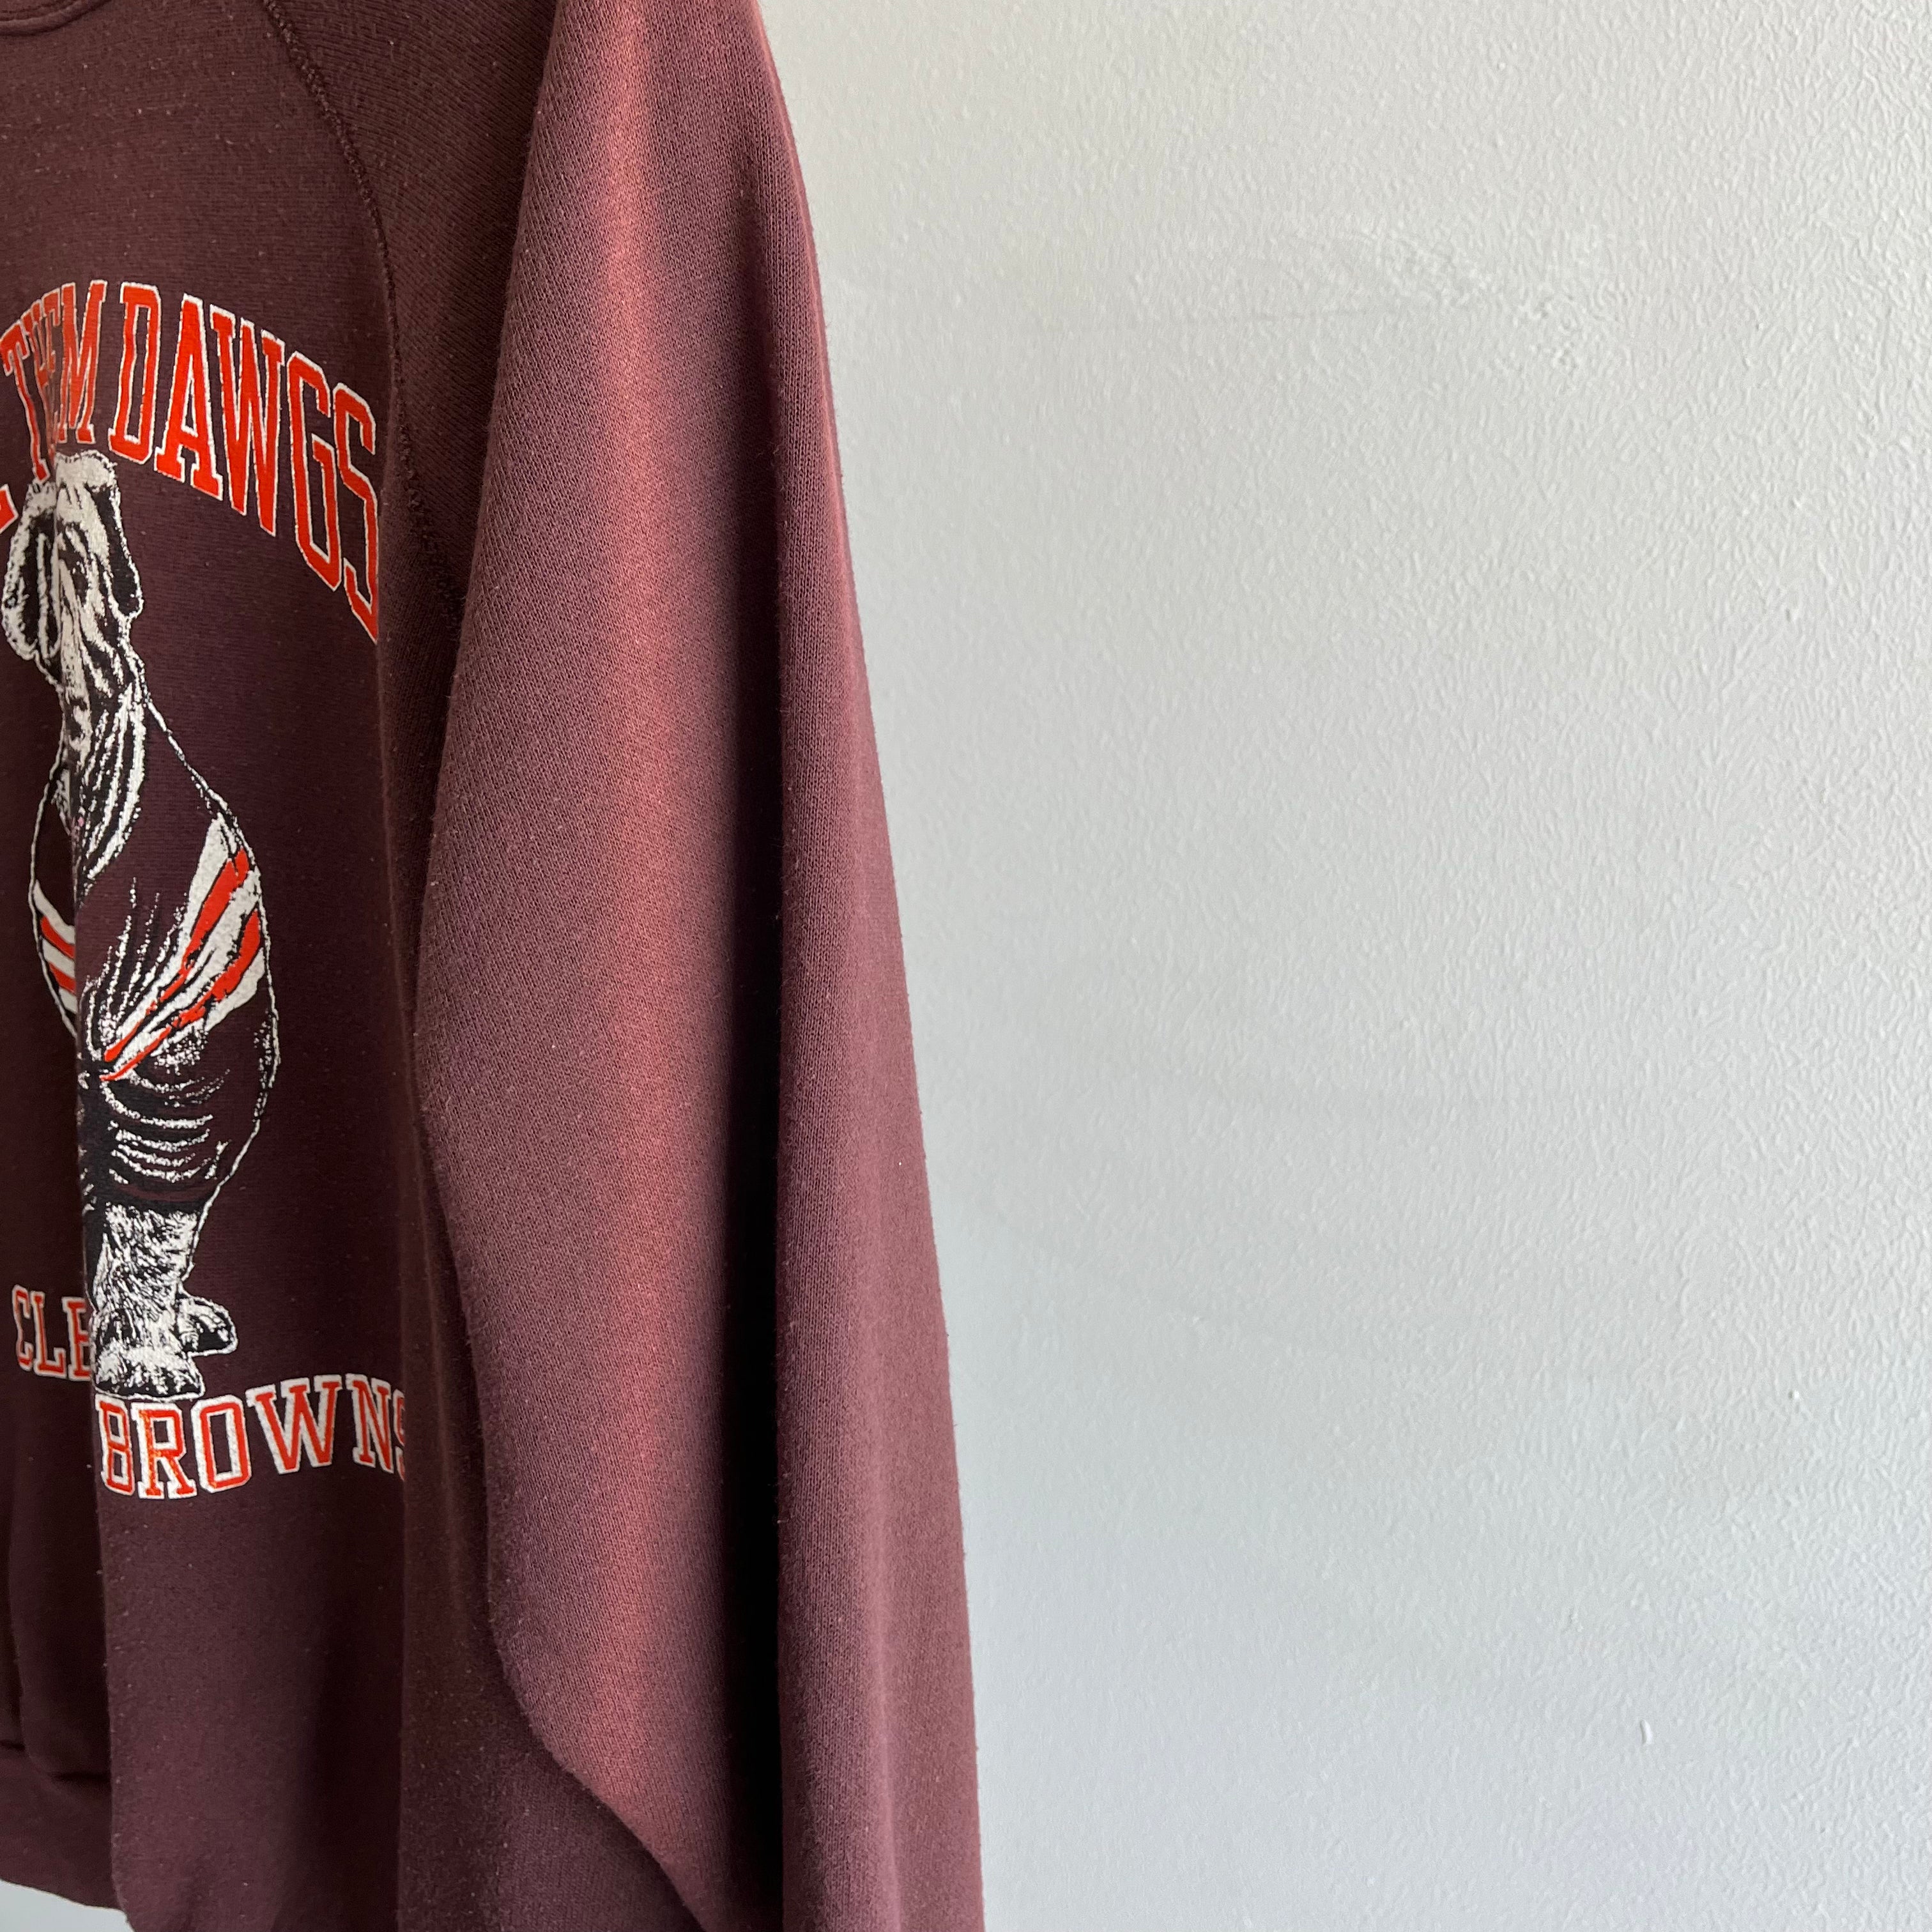 Cleveland Browns DOG POUND Vintage NFL Crewneck Sweatshirt